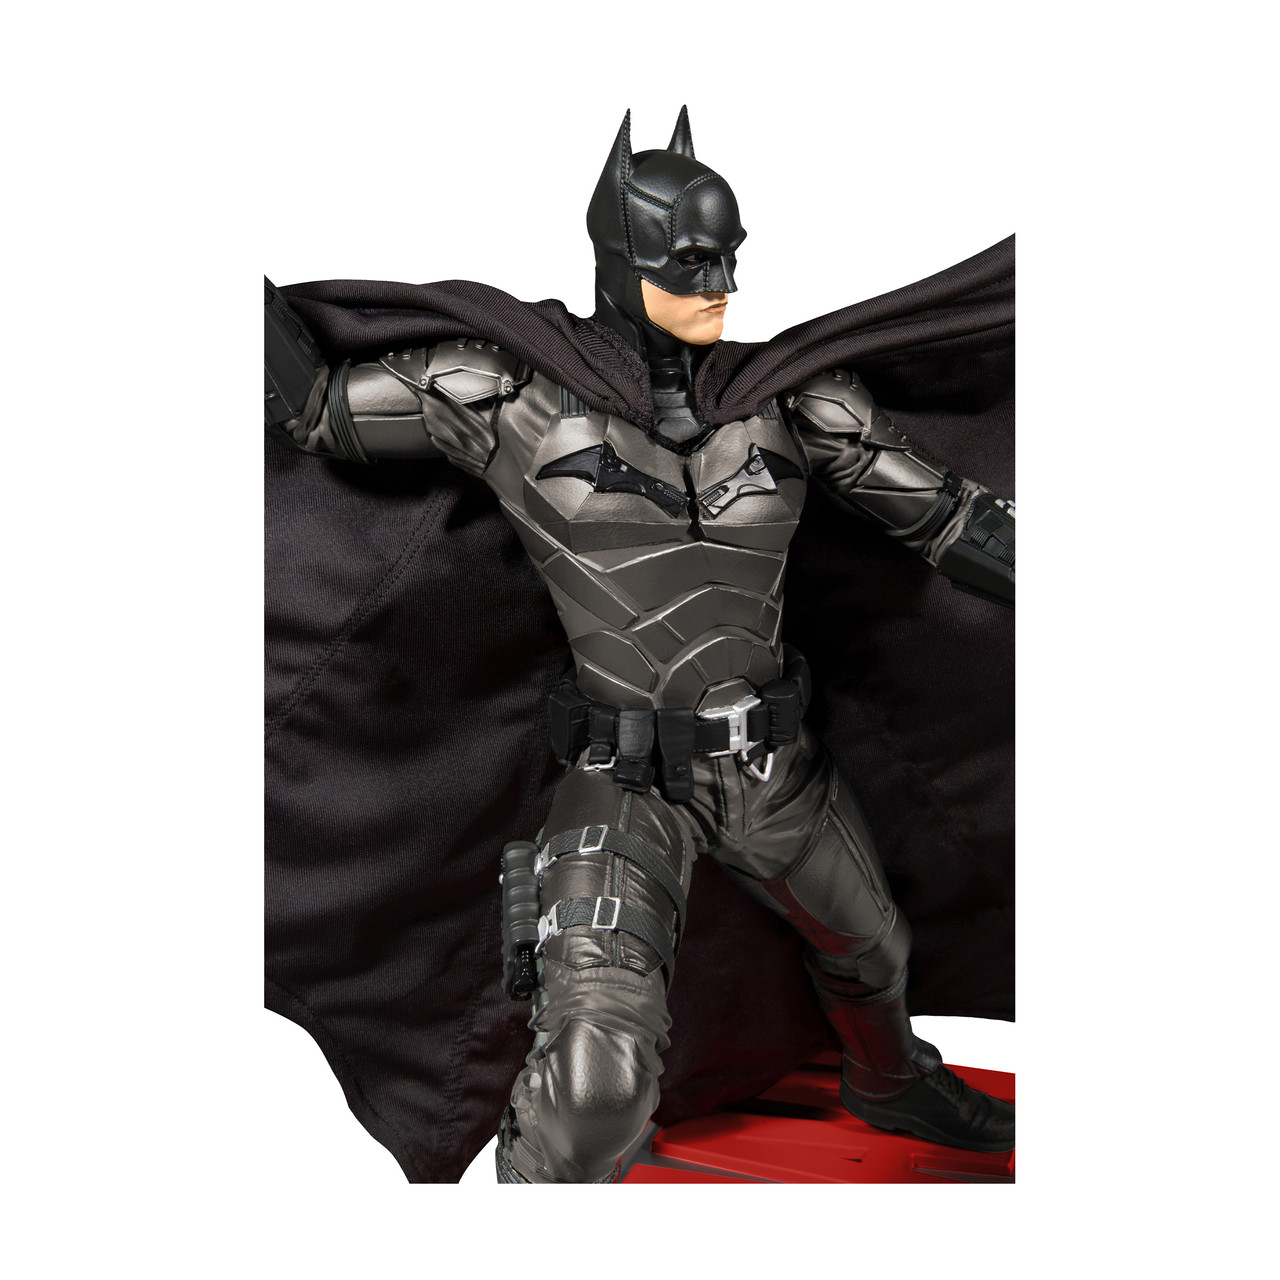 BATMAN - The Batman Life Size Statue Muckle - LIBERTY Toys